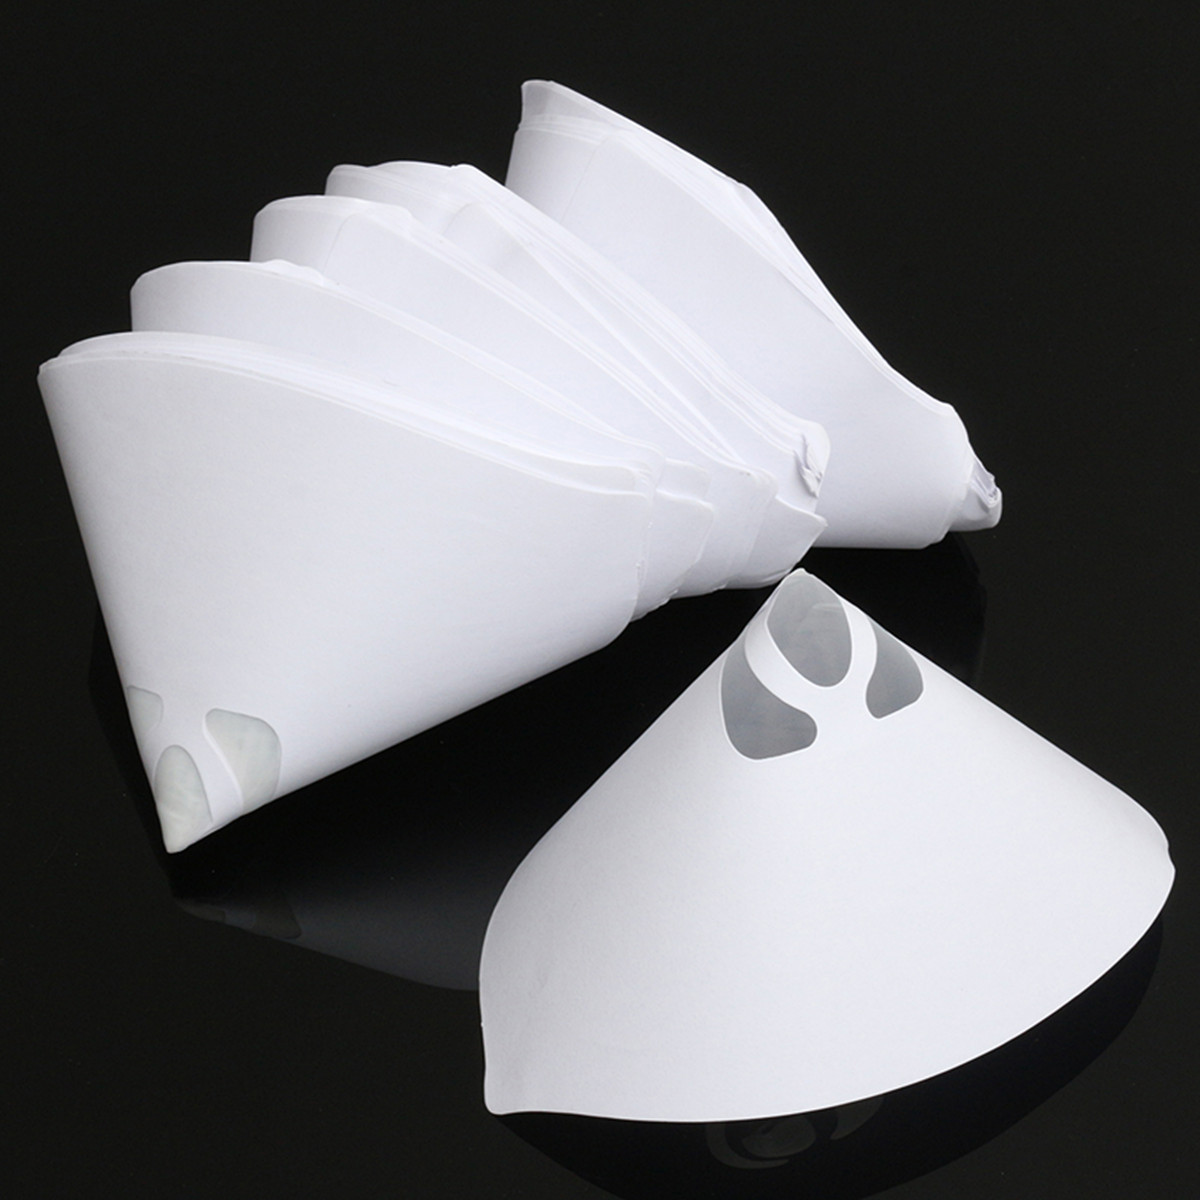 Paper Paint Strainers Paint Conical Strainers Mesh Filter Cone Strainer50Pcs/set Paint Paper Funnel